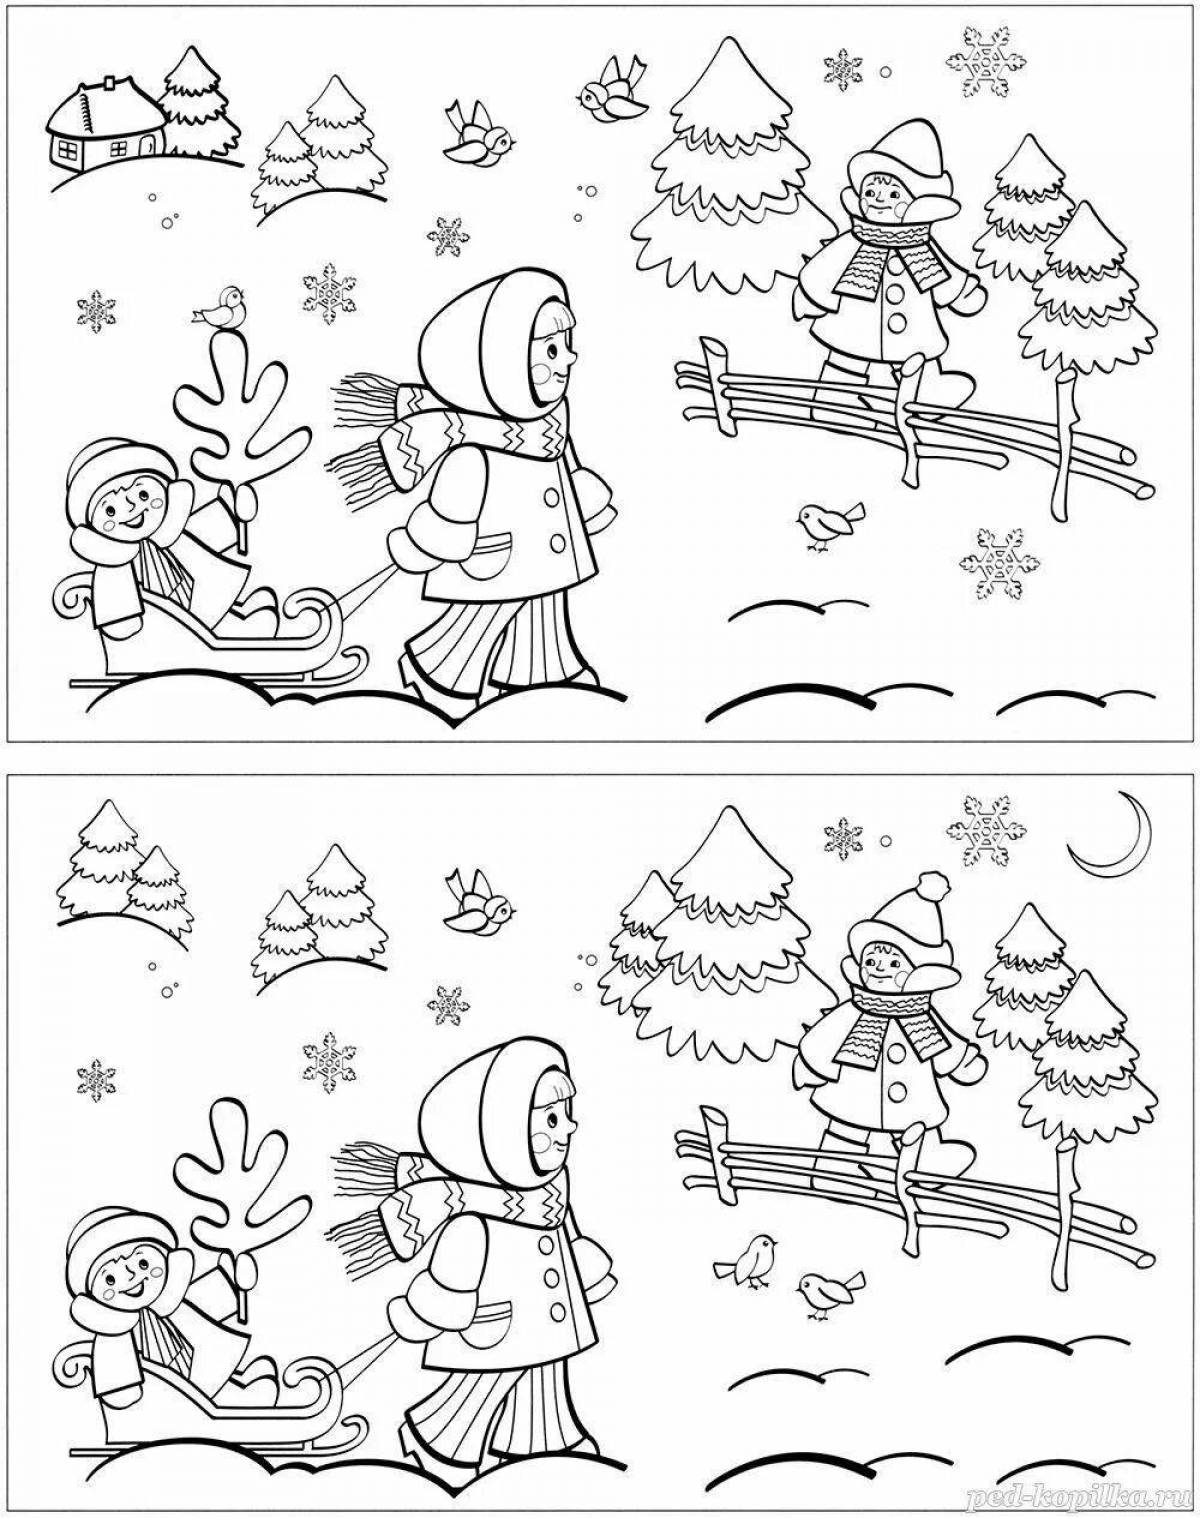 Glitter coloring book for children 2-3 years old for kindergarten winter